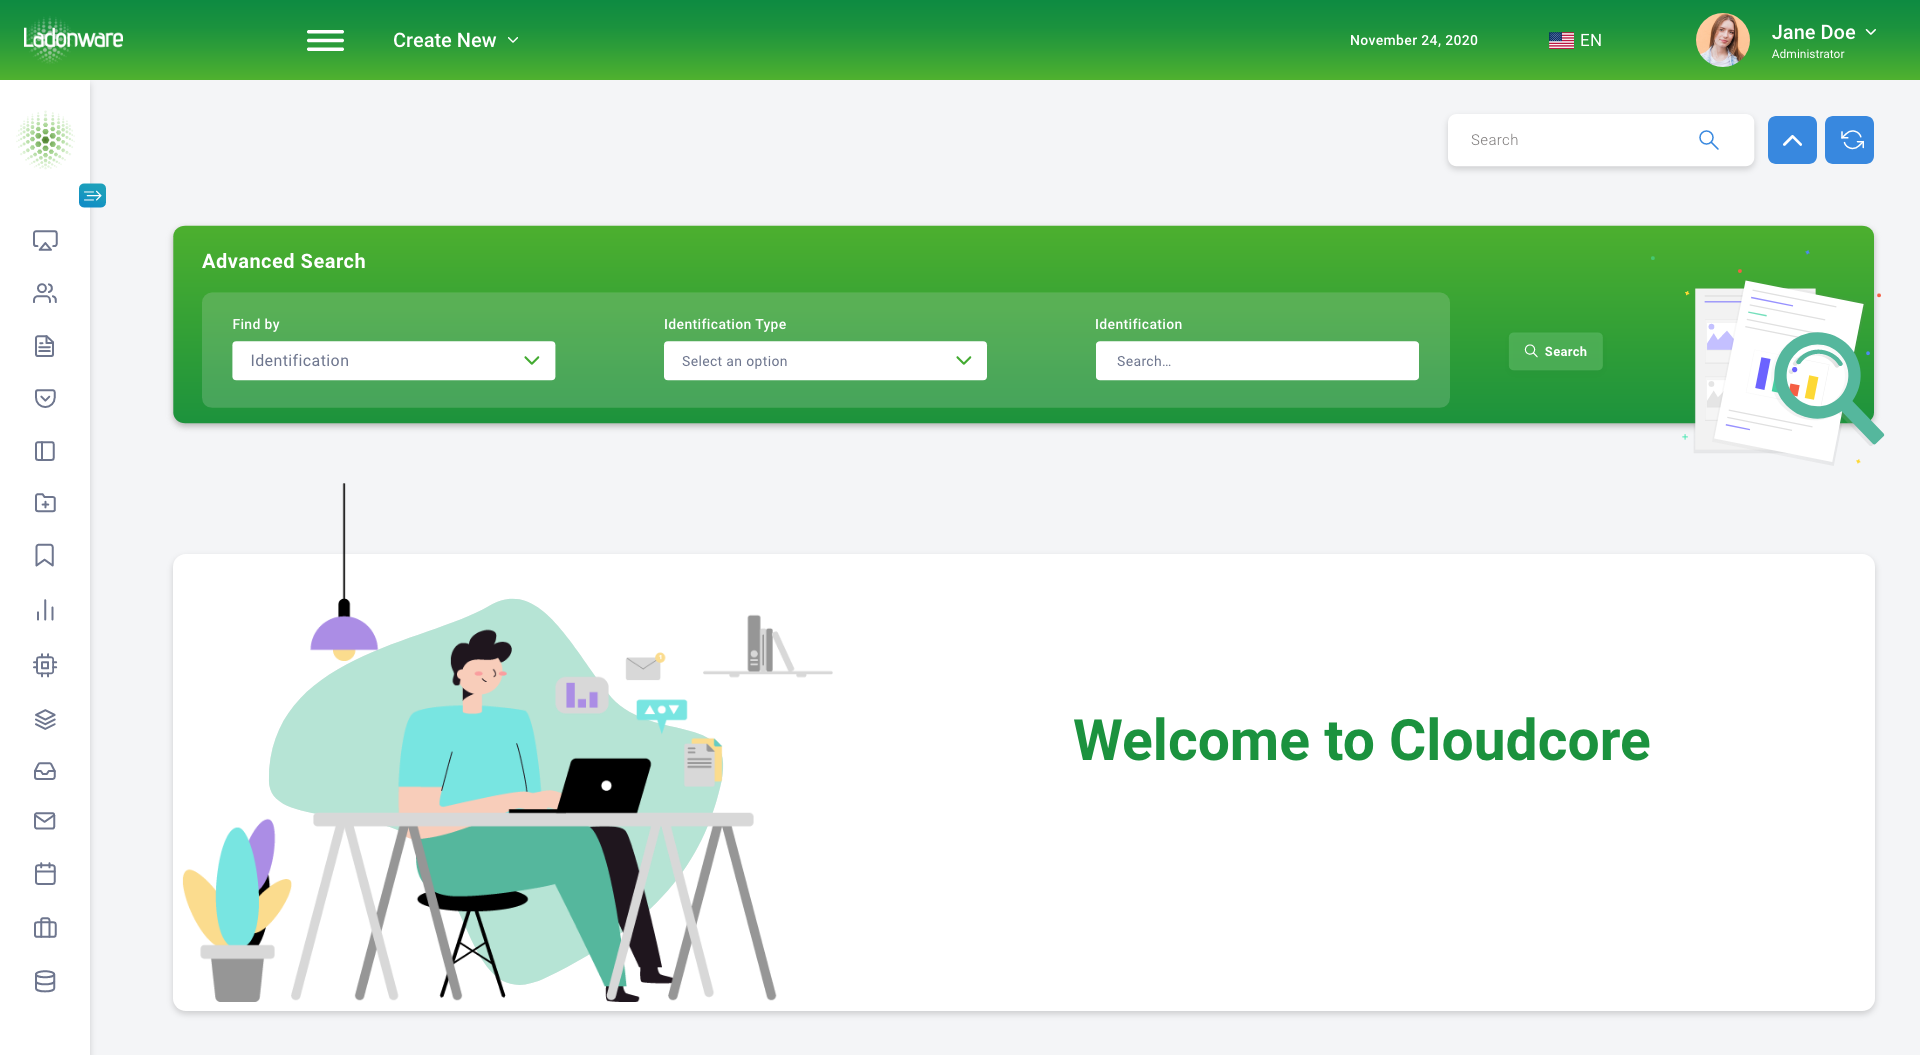 Cloudcore Welcome Screen